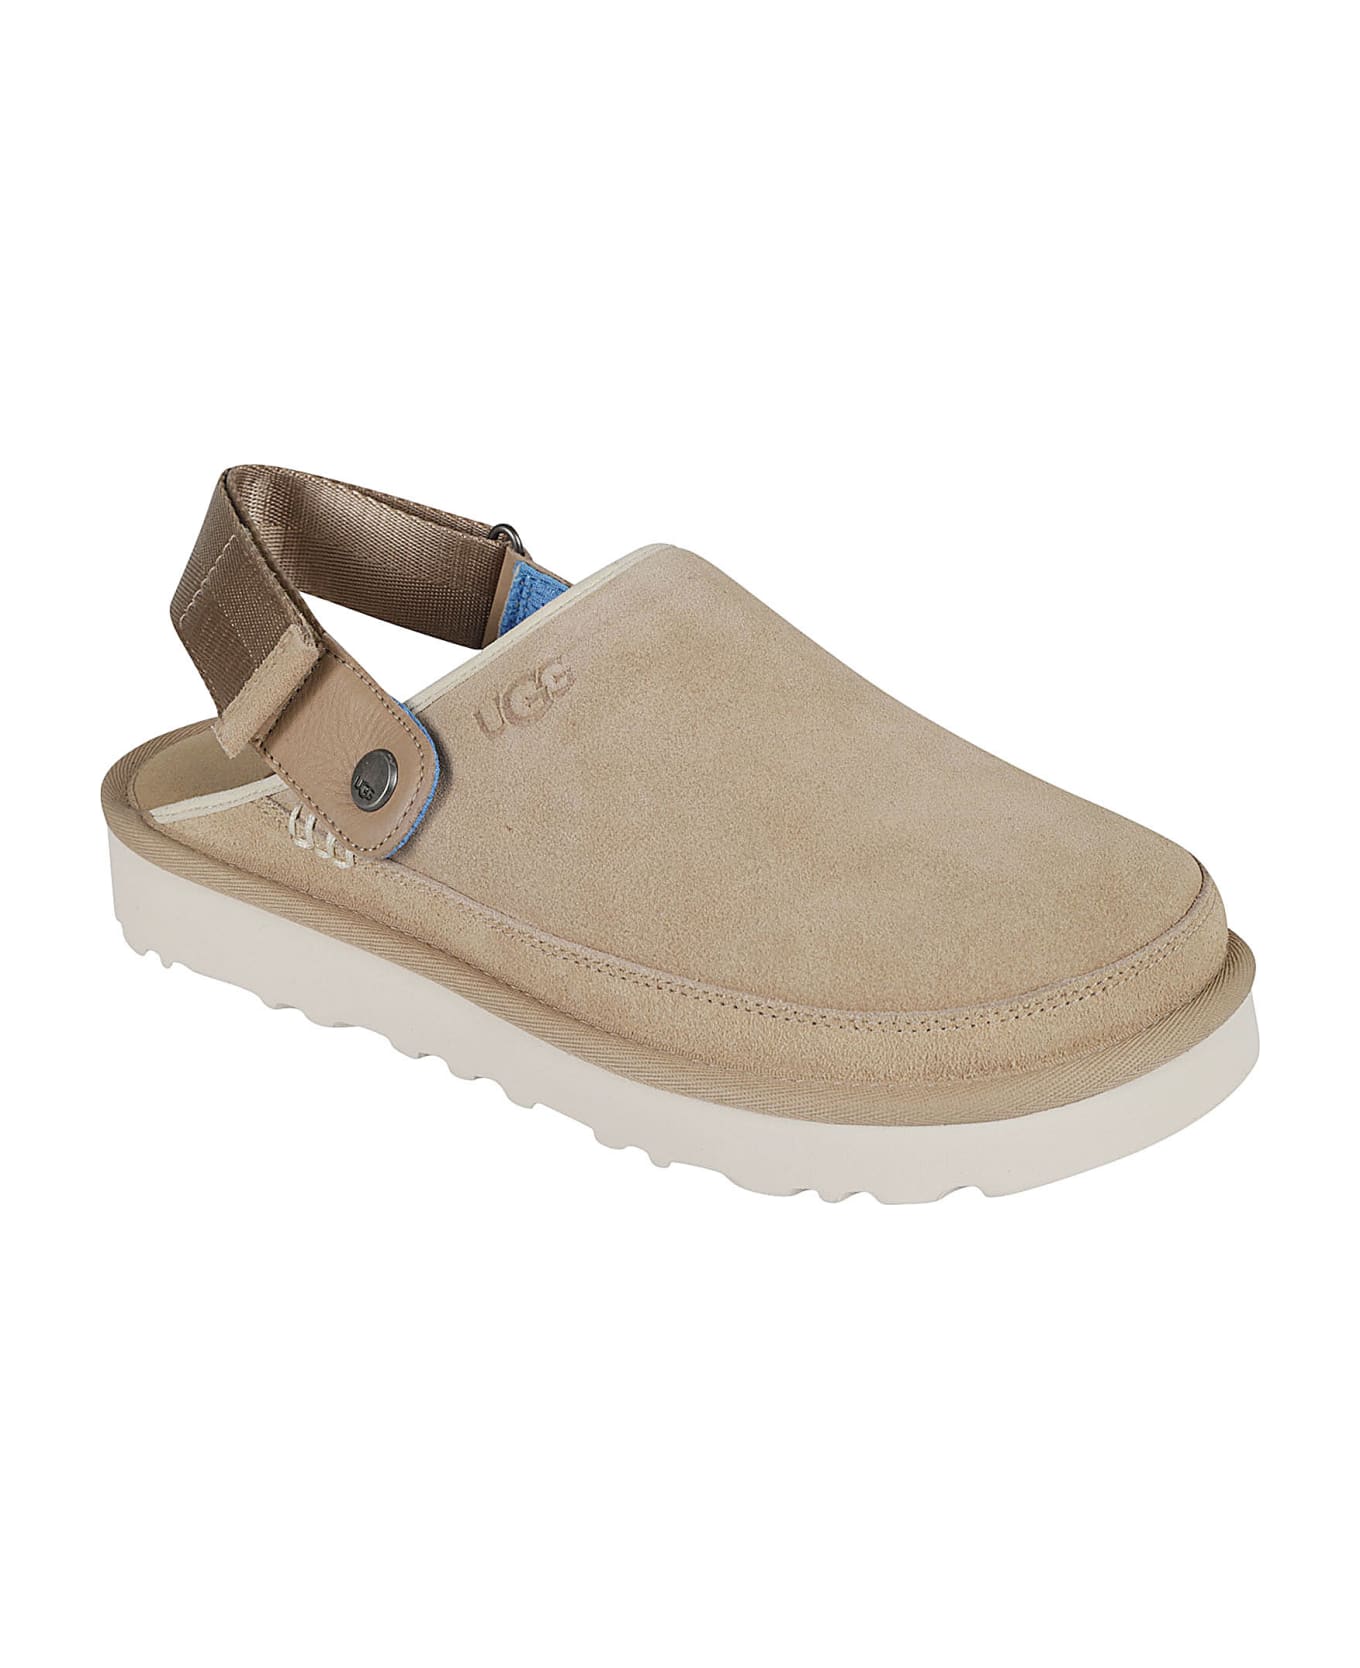 UGG Golden Coast Clog Sandals - SAND/SANTORINI